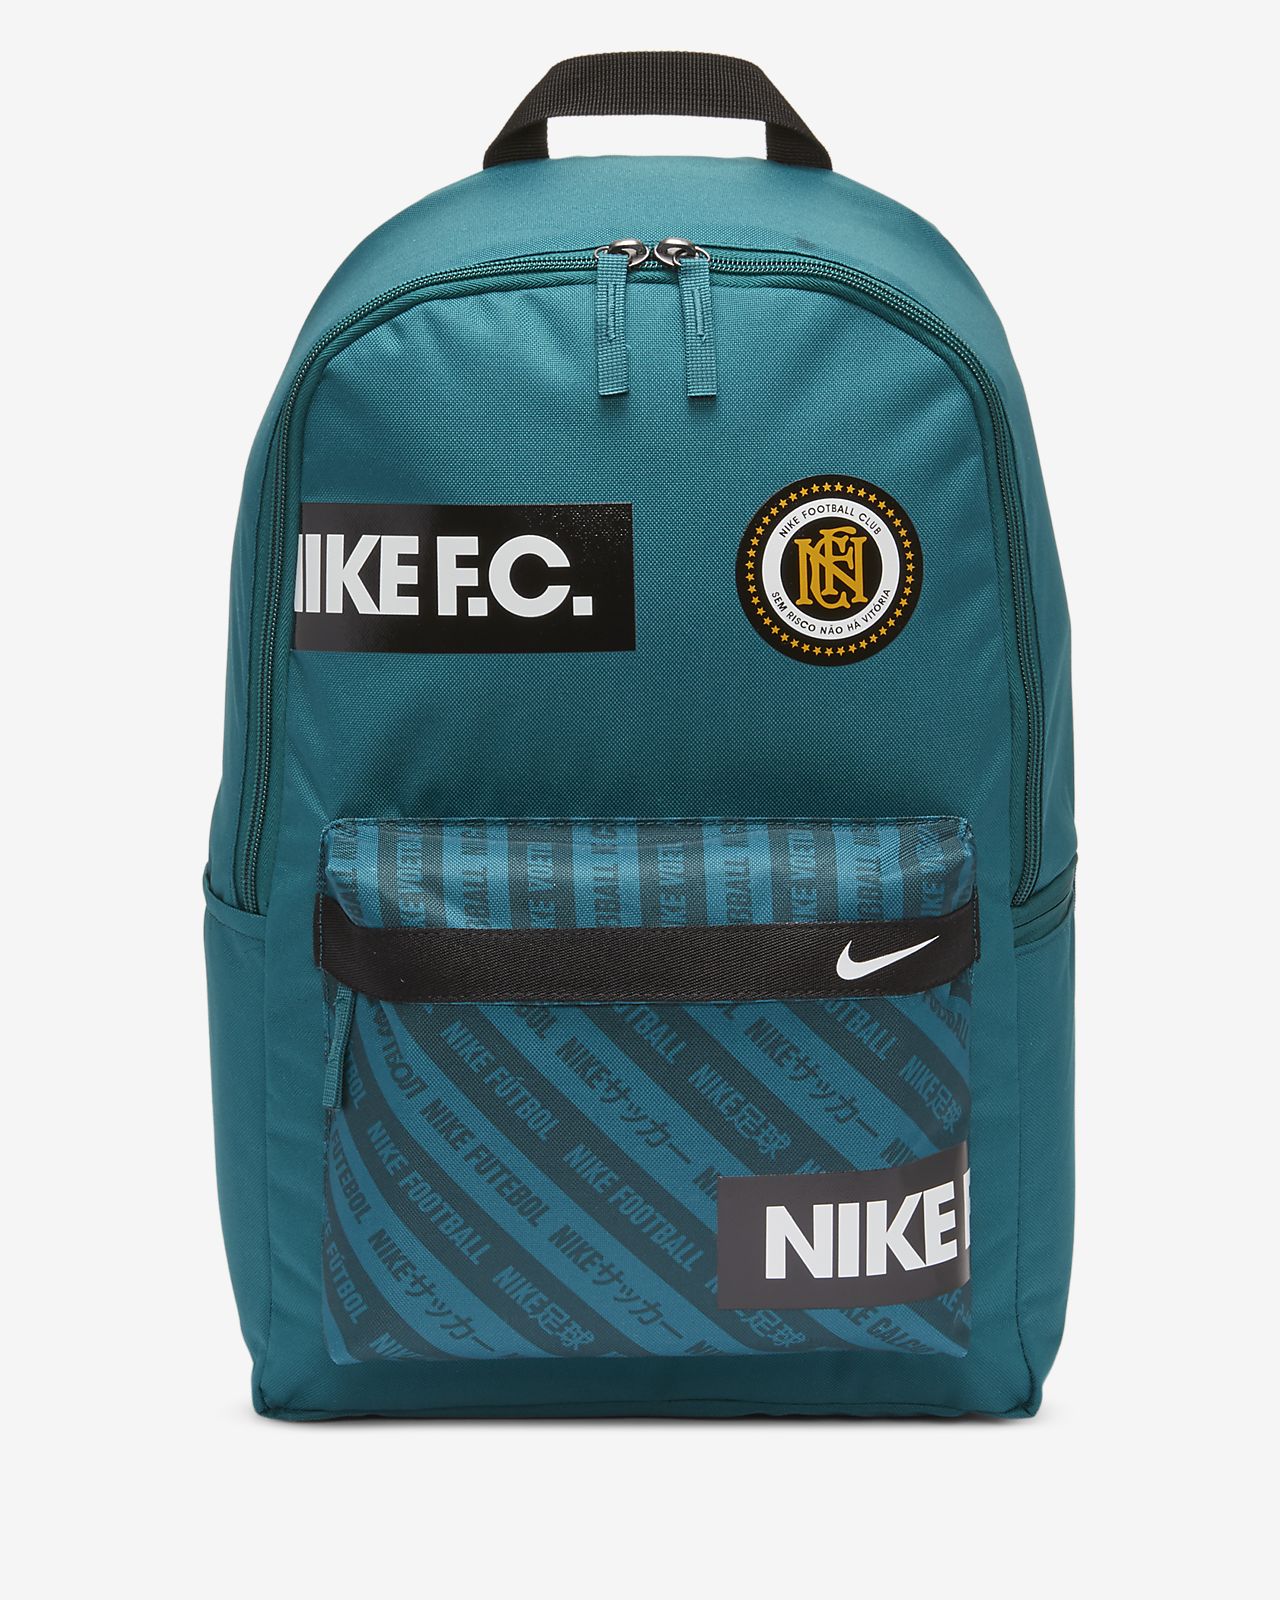 Download Nike F.C. Soccer Backpack. Nike.com